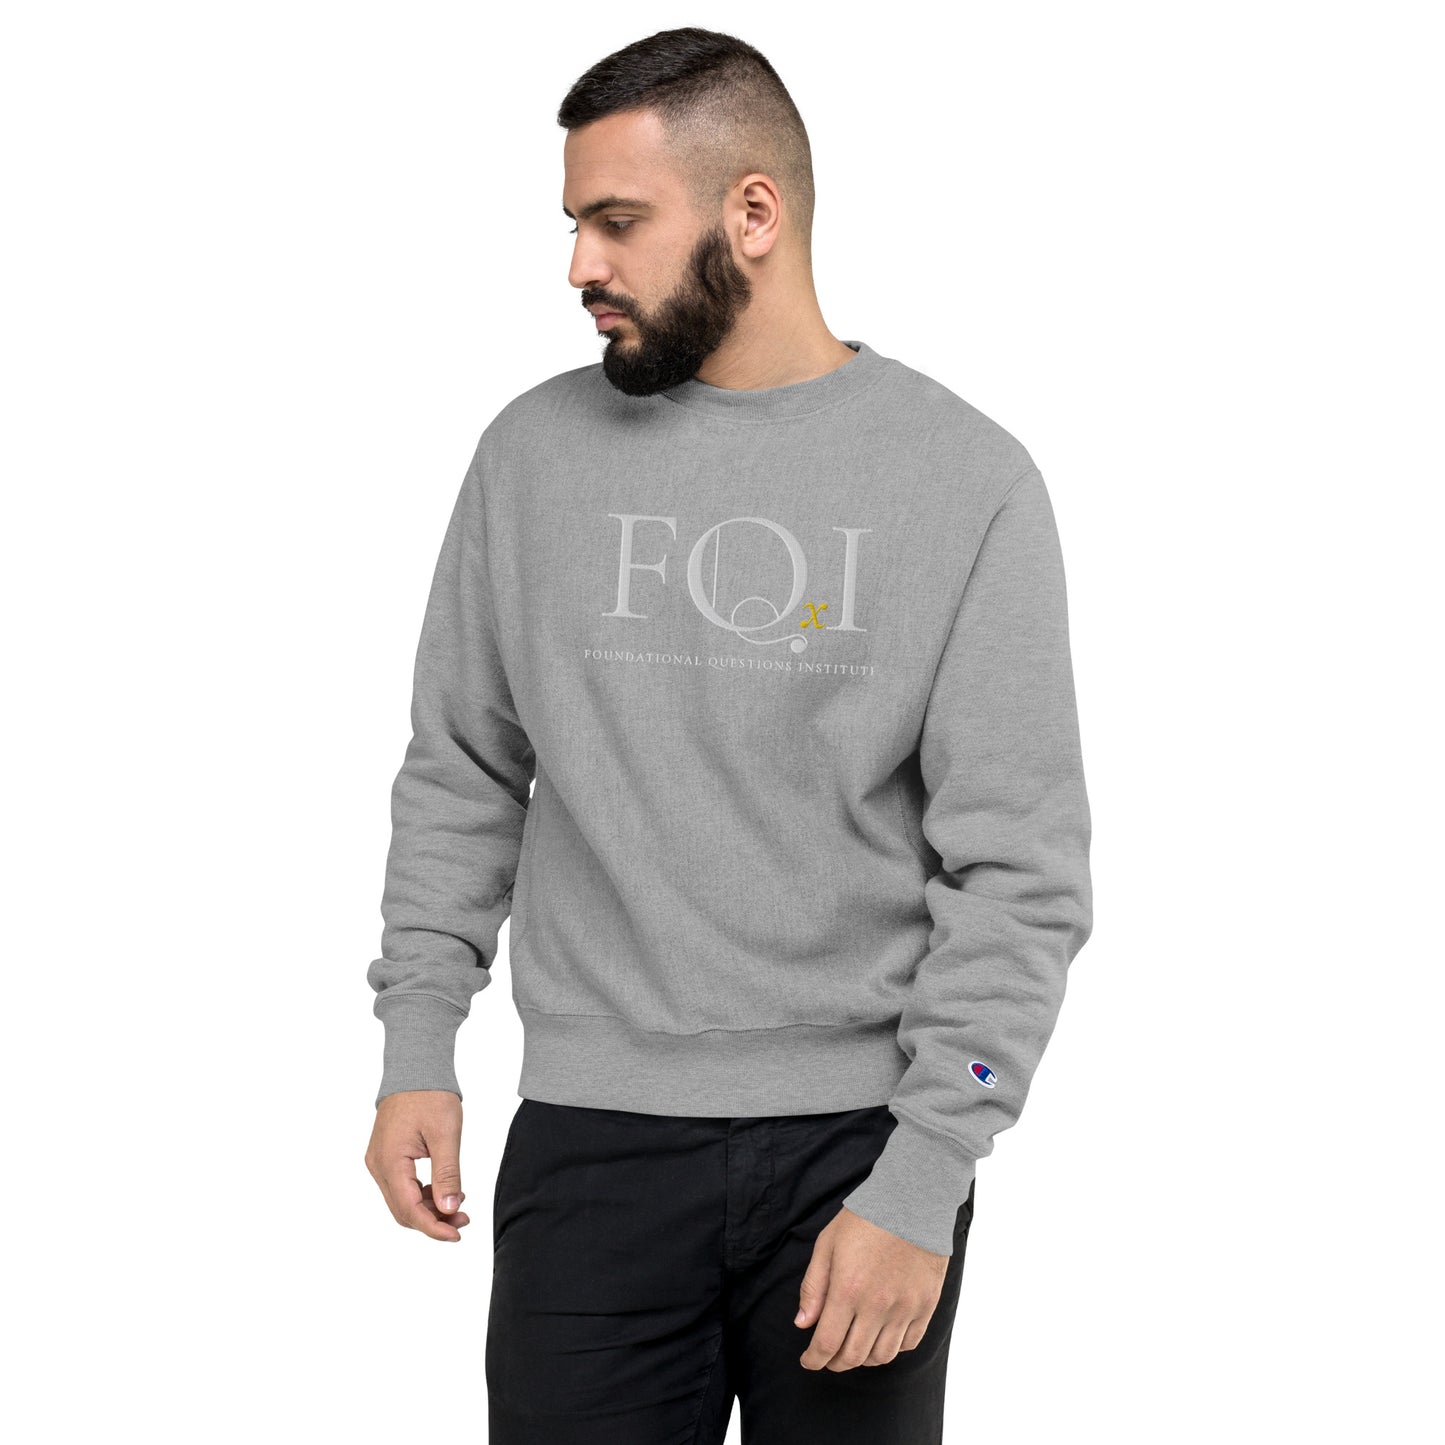 FQxI sweatshirt for all - Champion brand